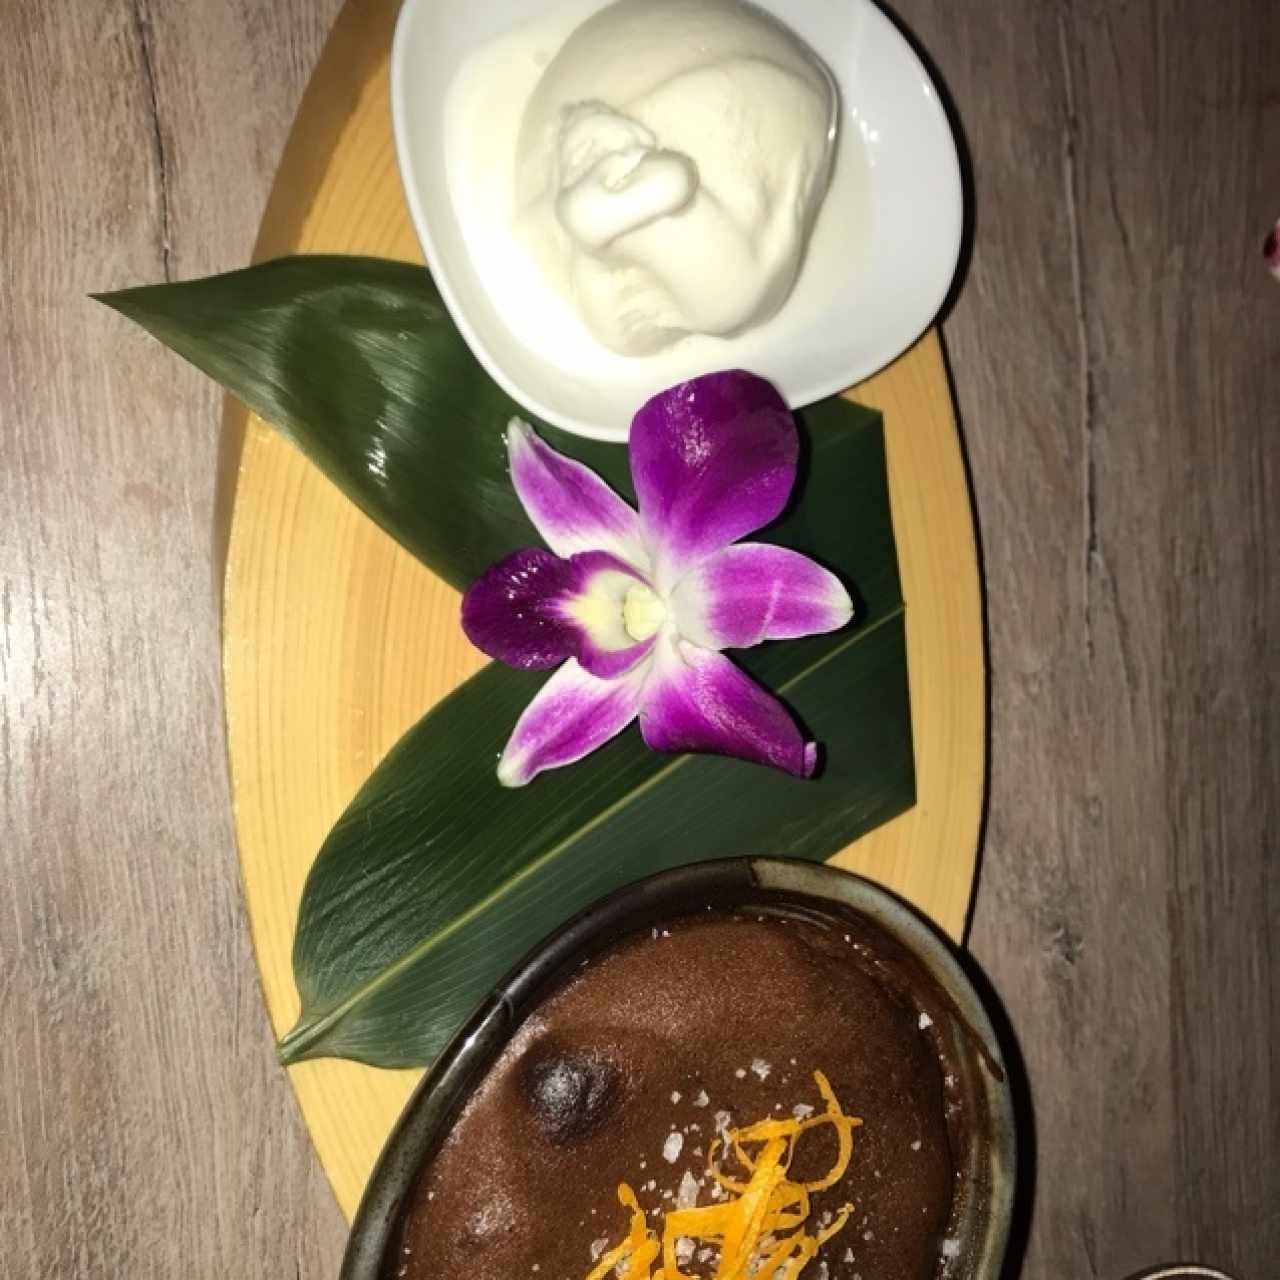 Chocolate Amazonico